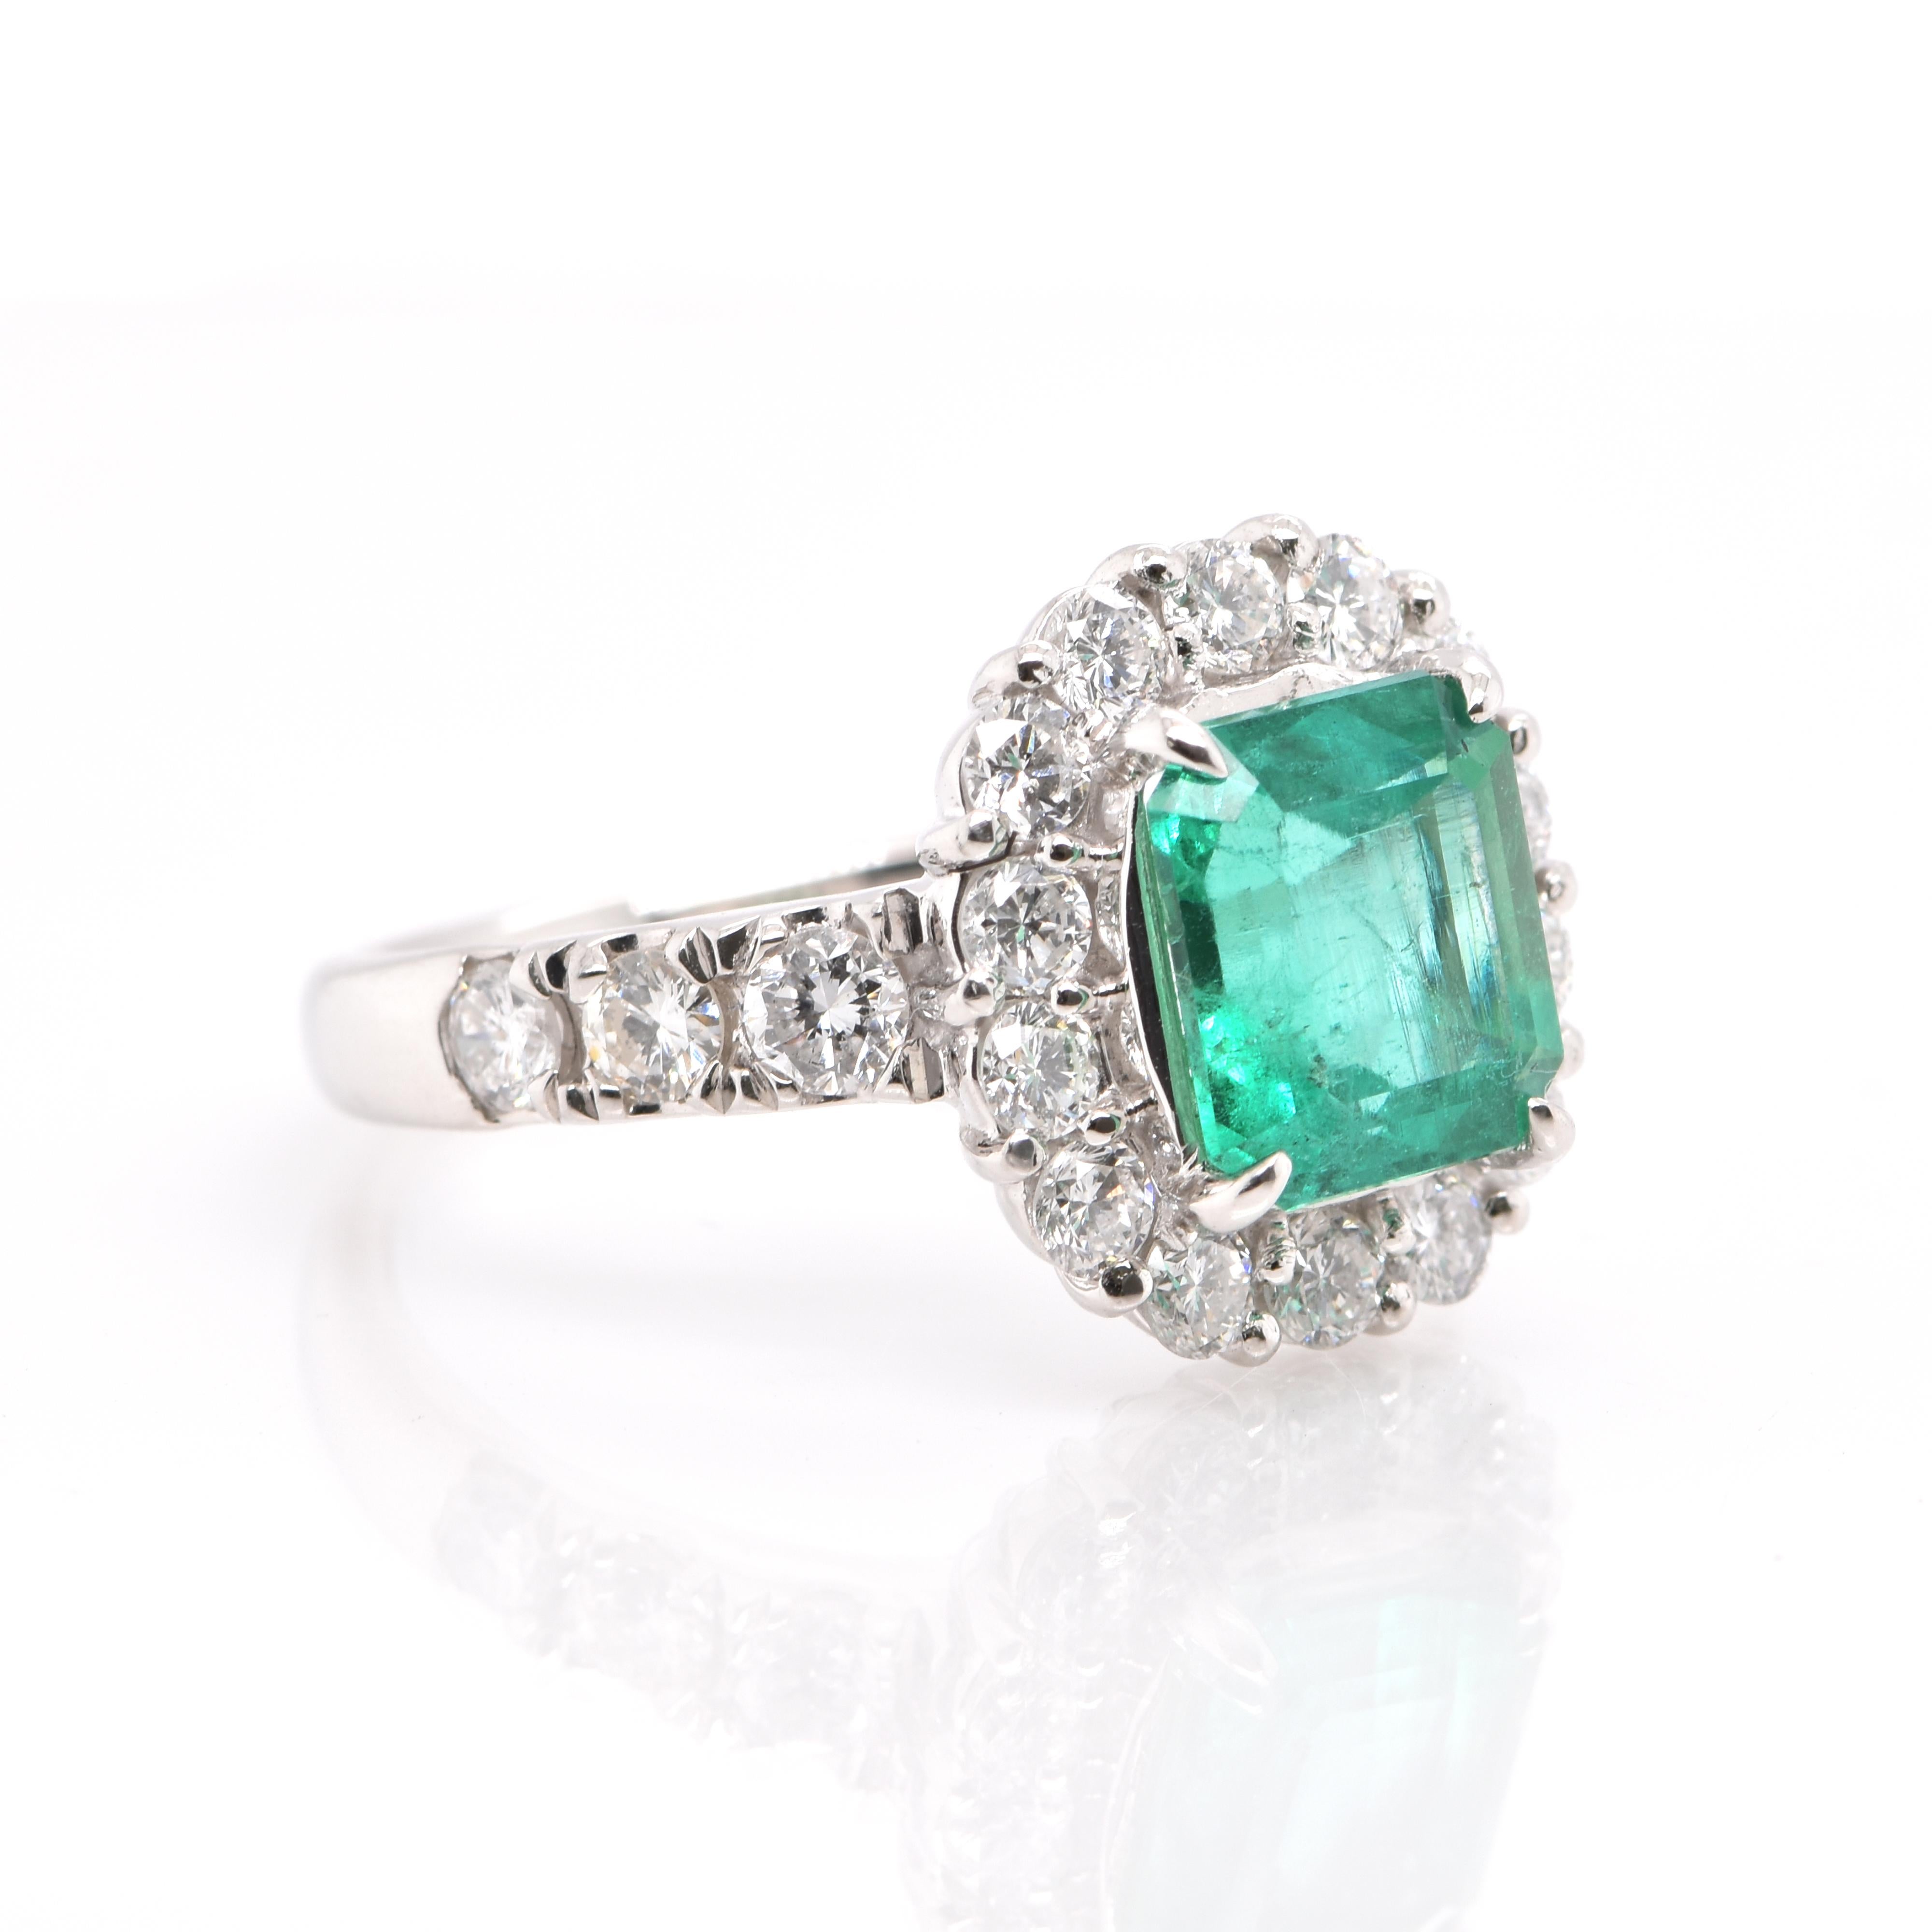 Modern 2.24 Carat Natural Emerald and Diamond Halo Engagement Ring Set in Platinum